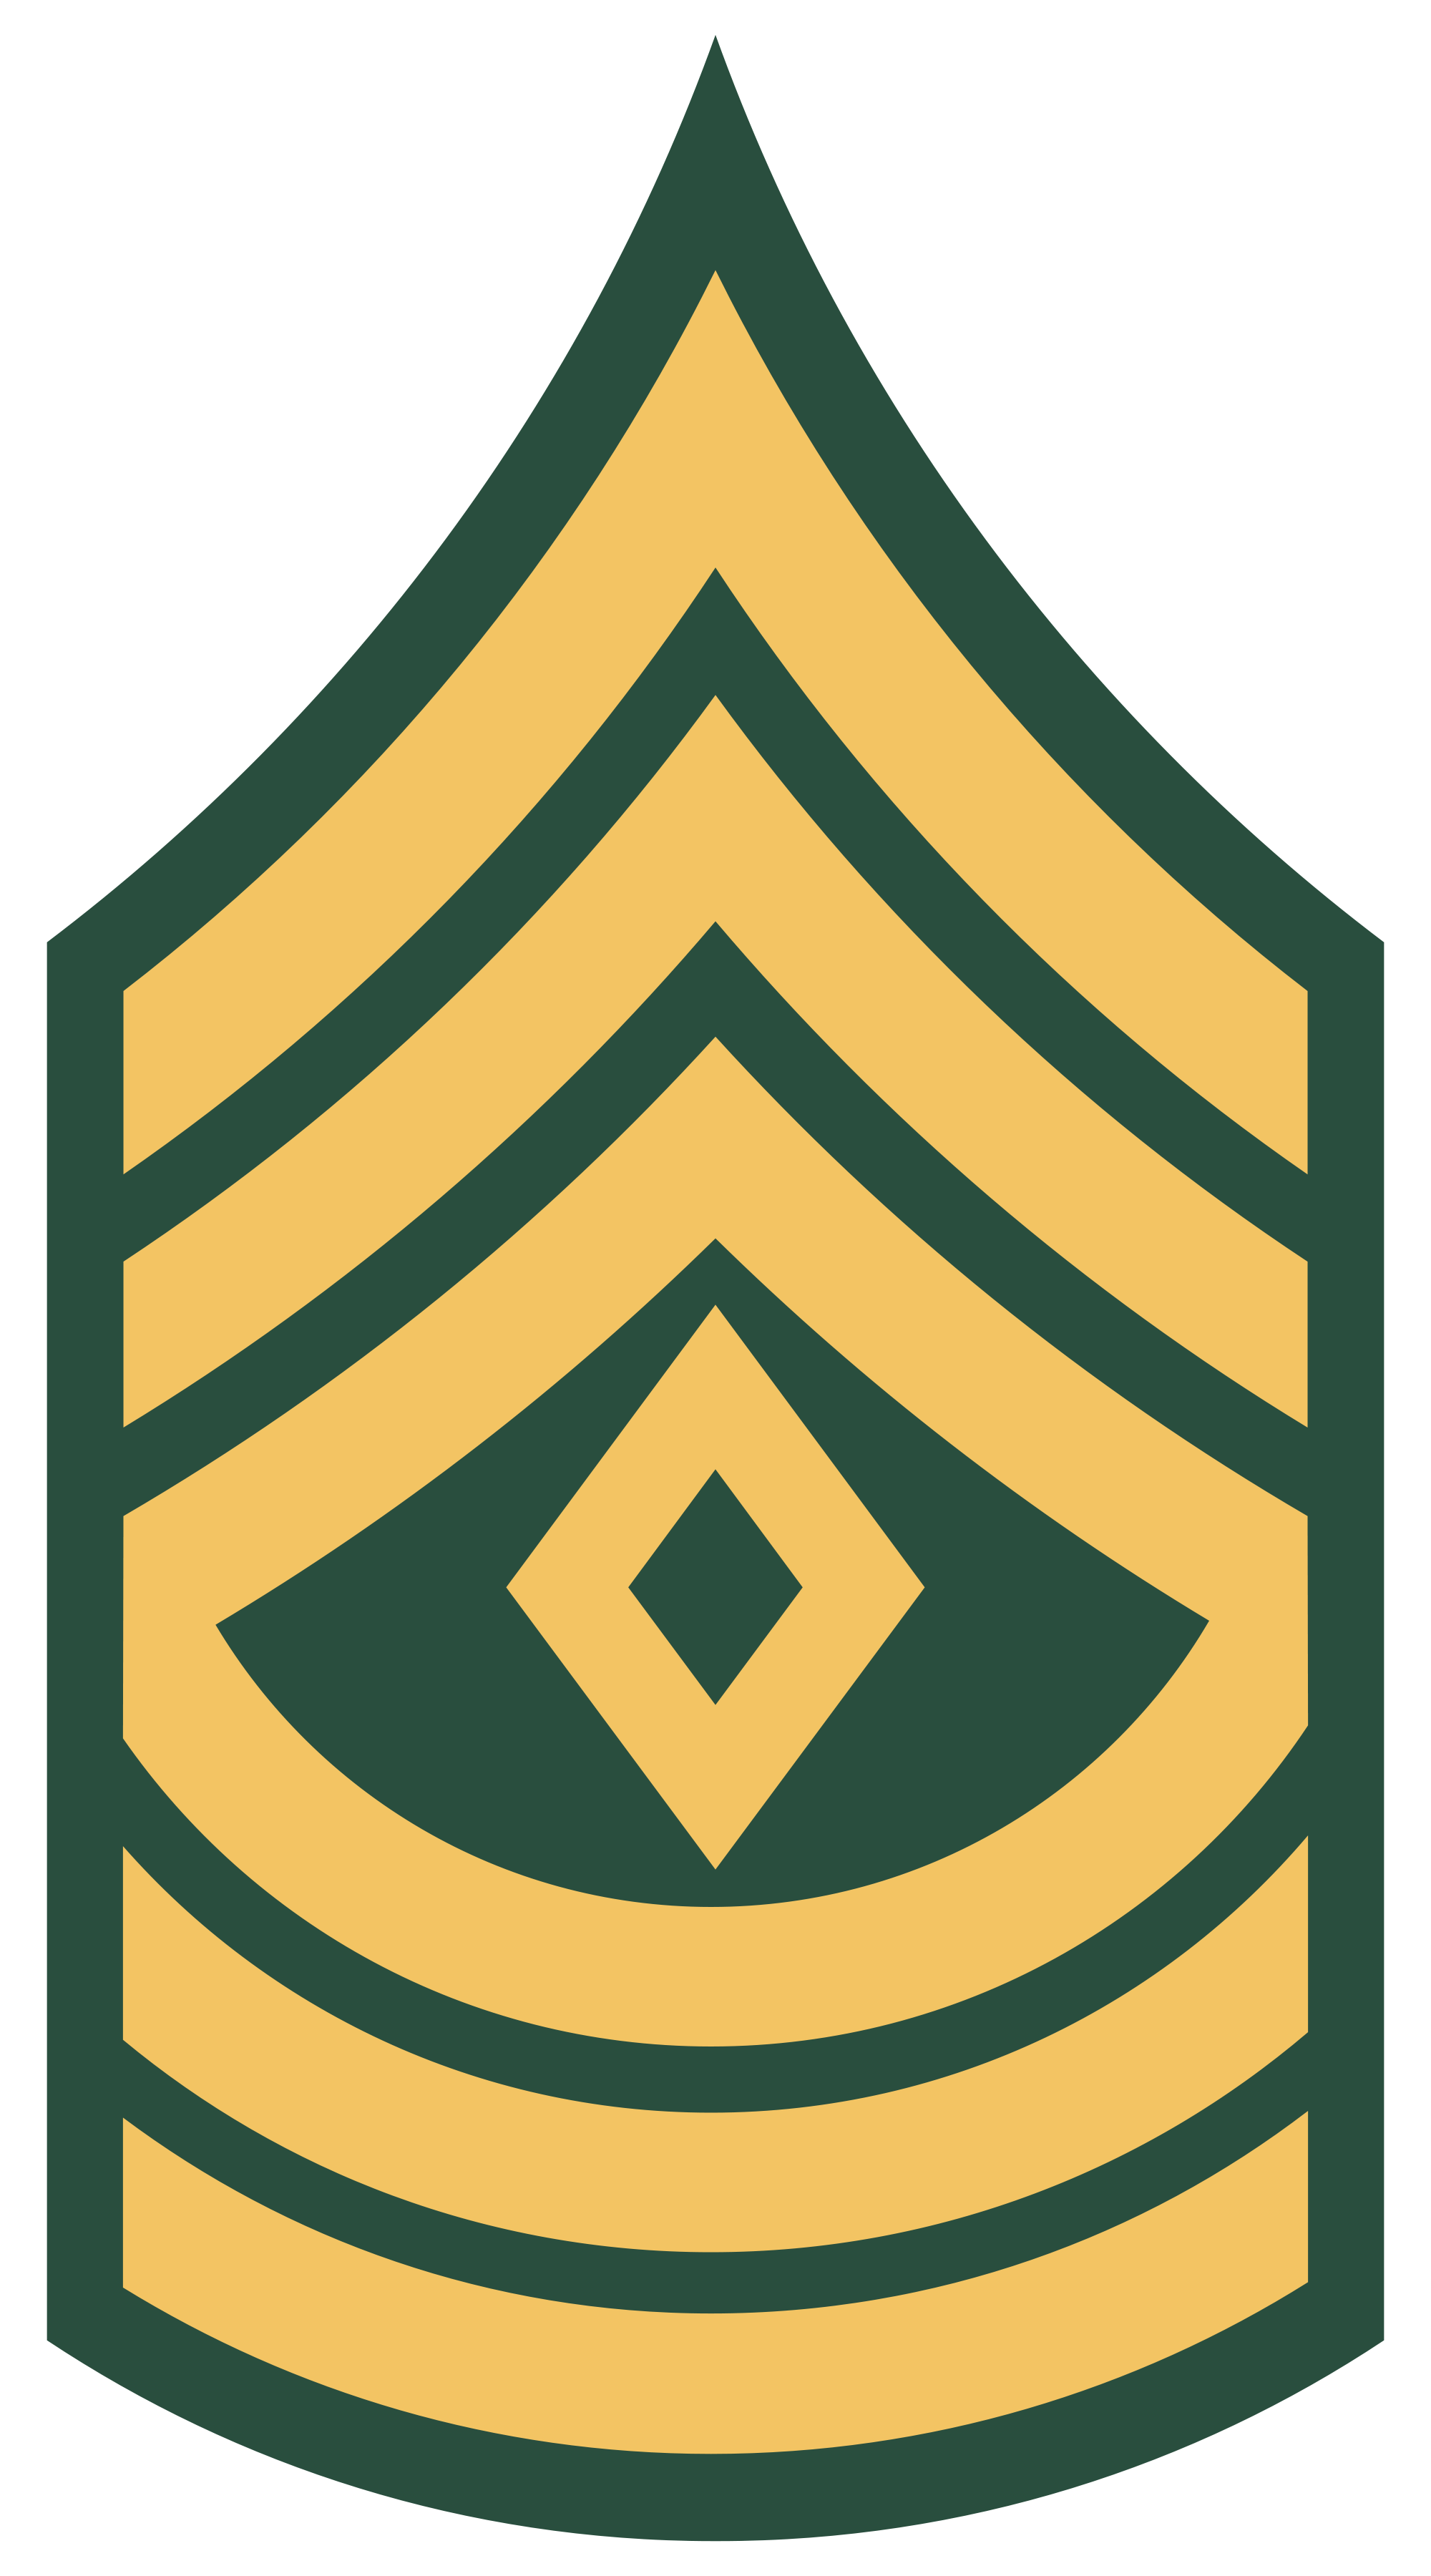 Pix For > Us Army Emblem Clip Art